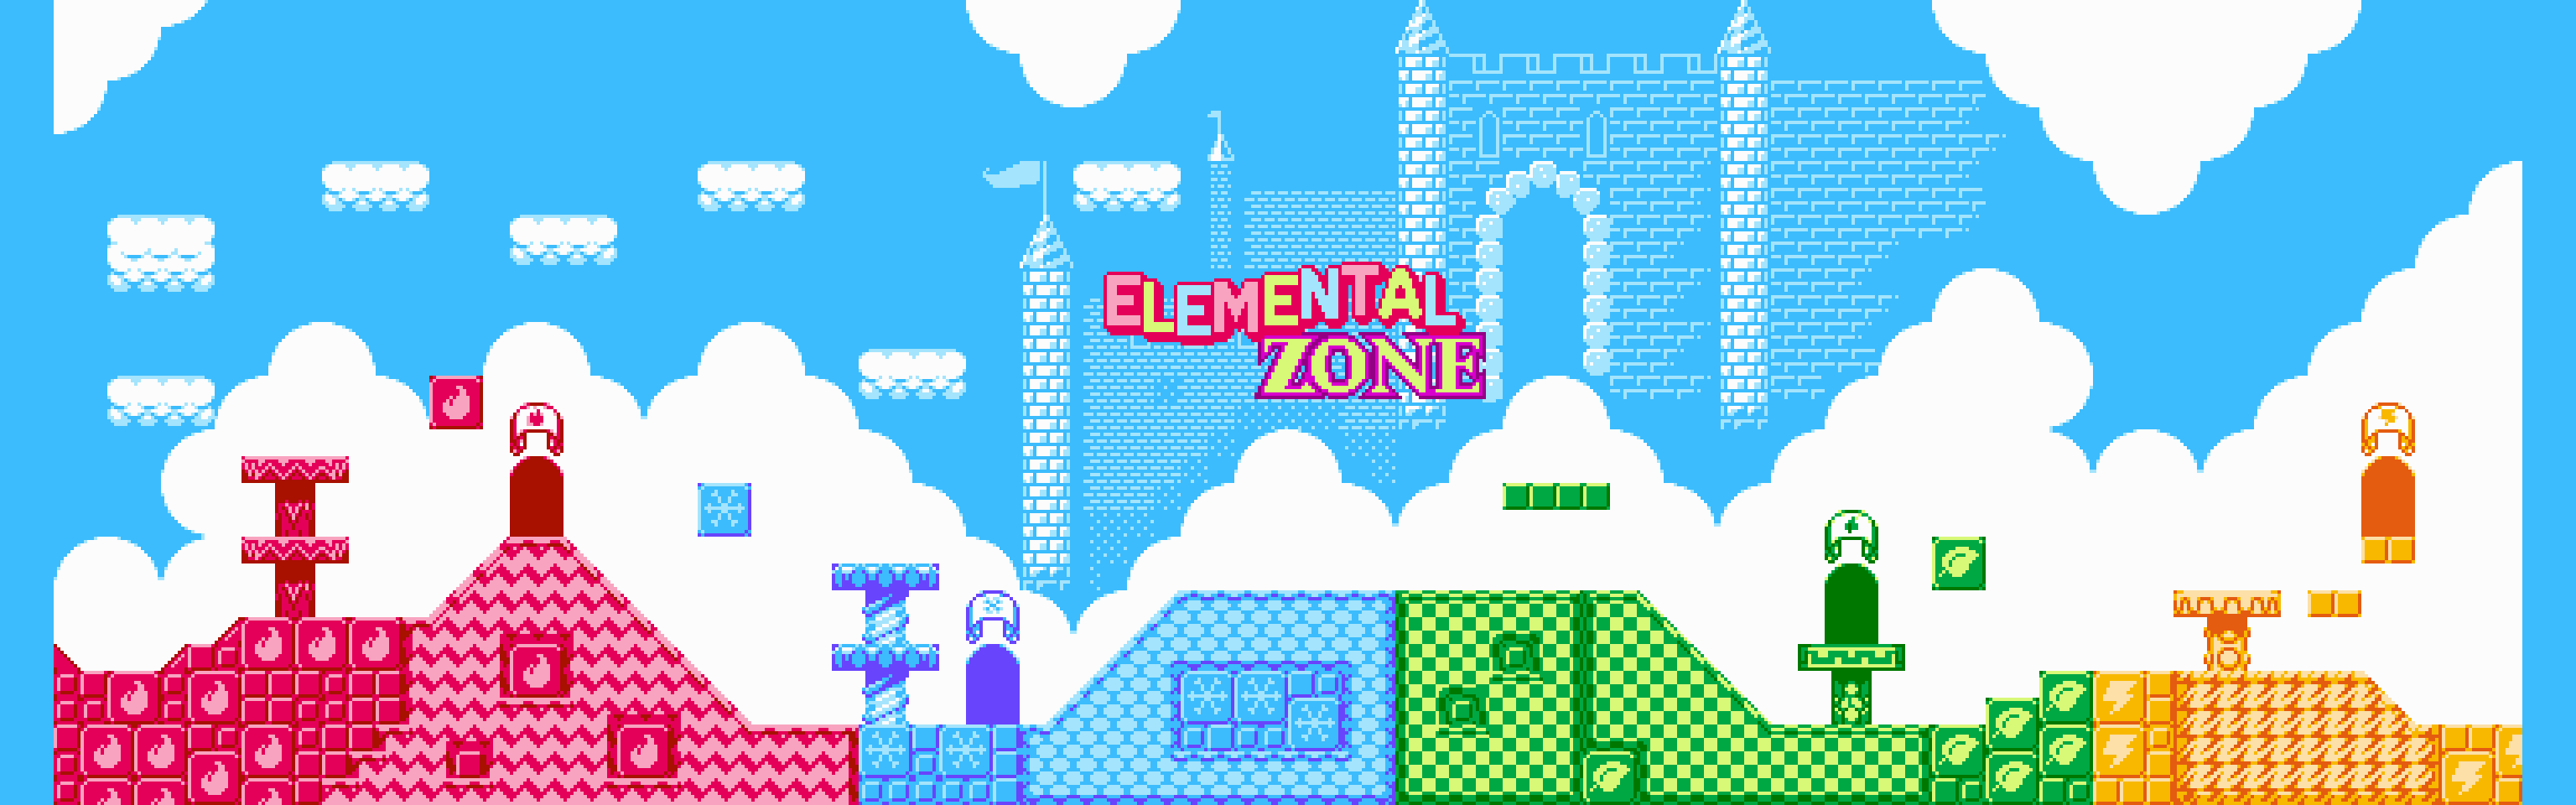 Elemental Zone Asset Pack